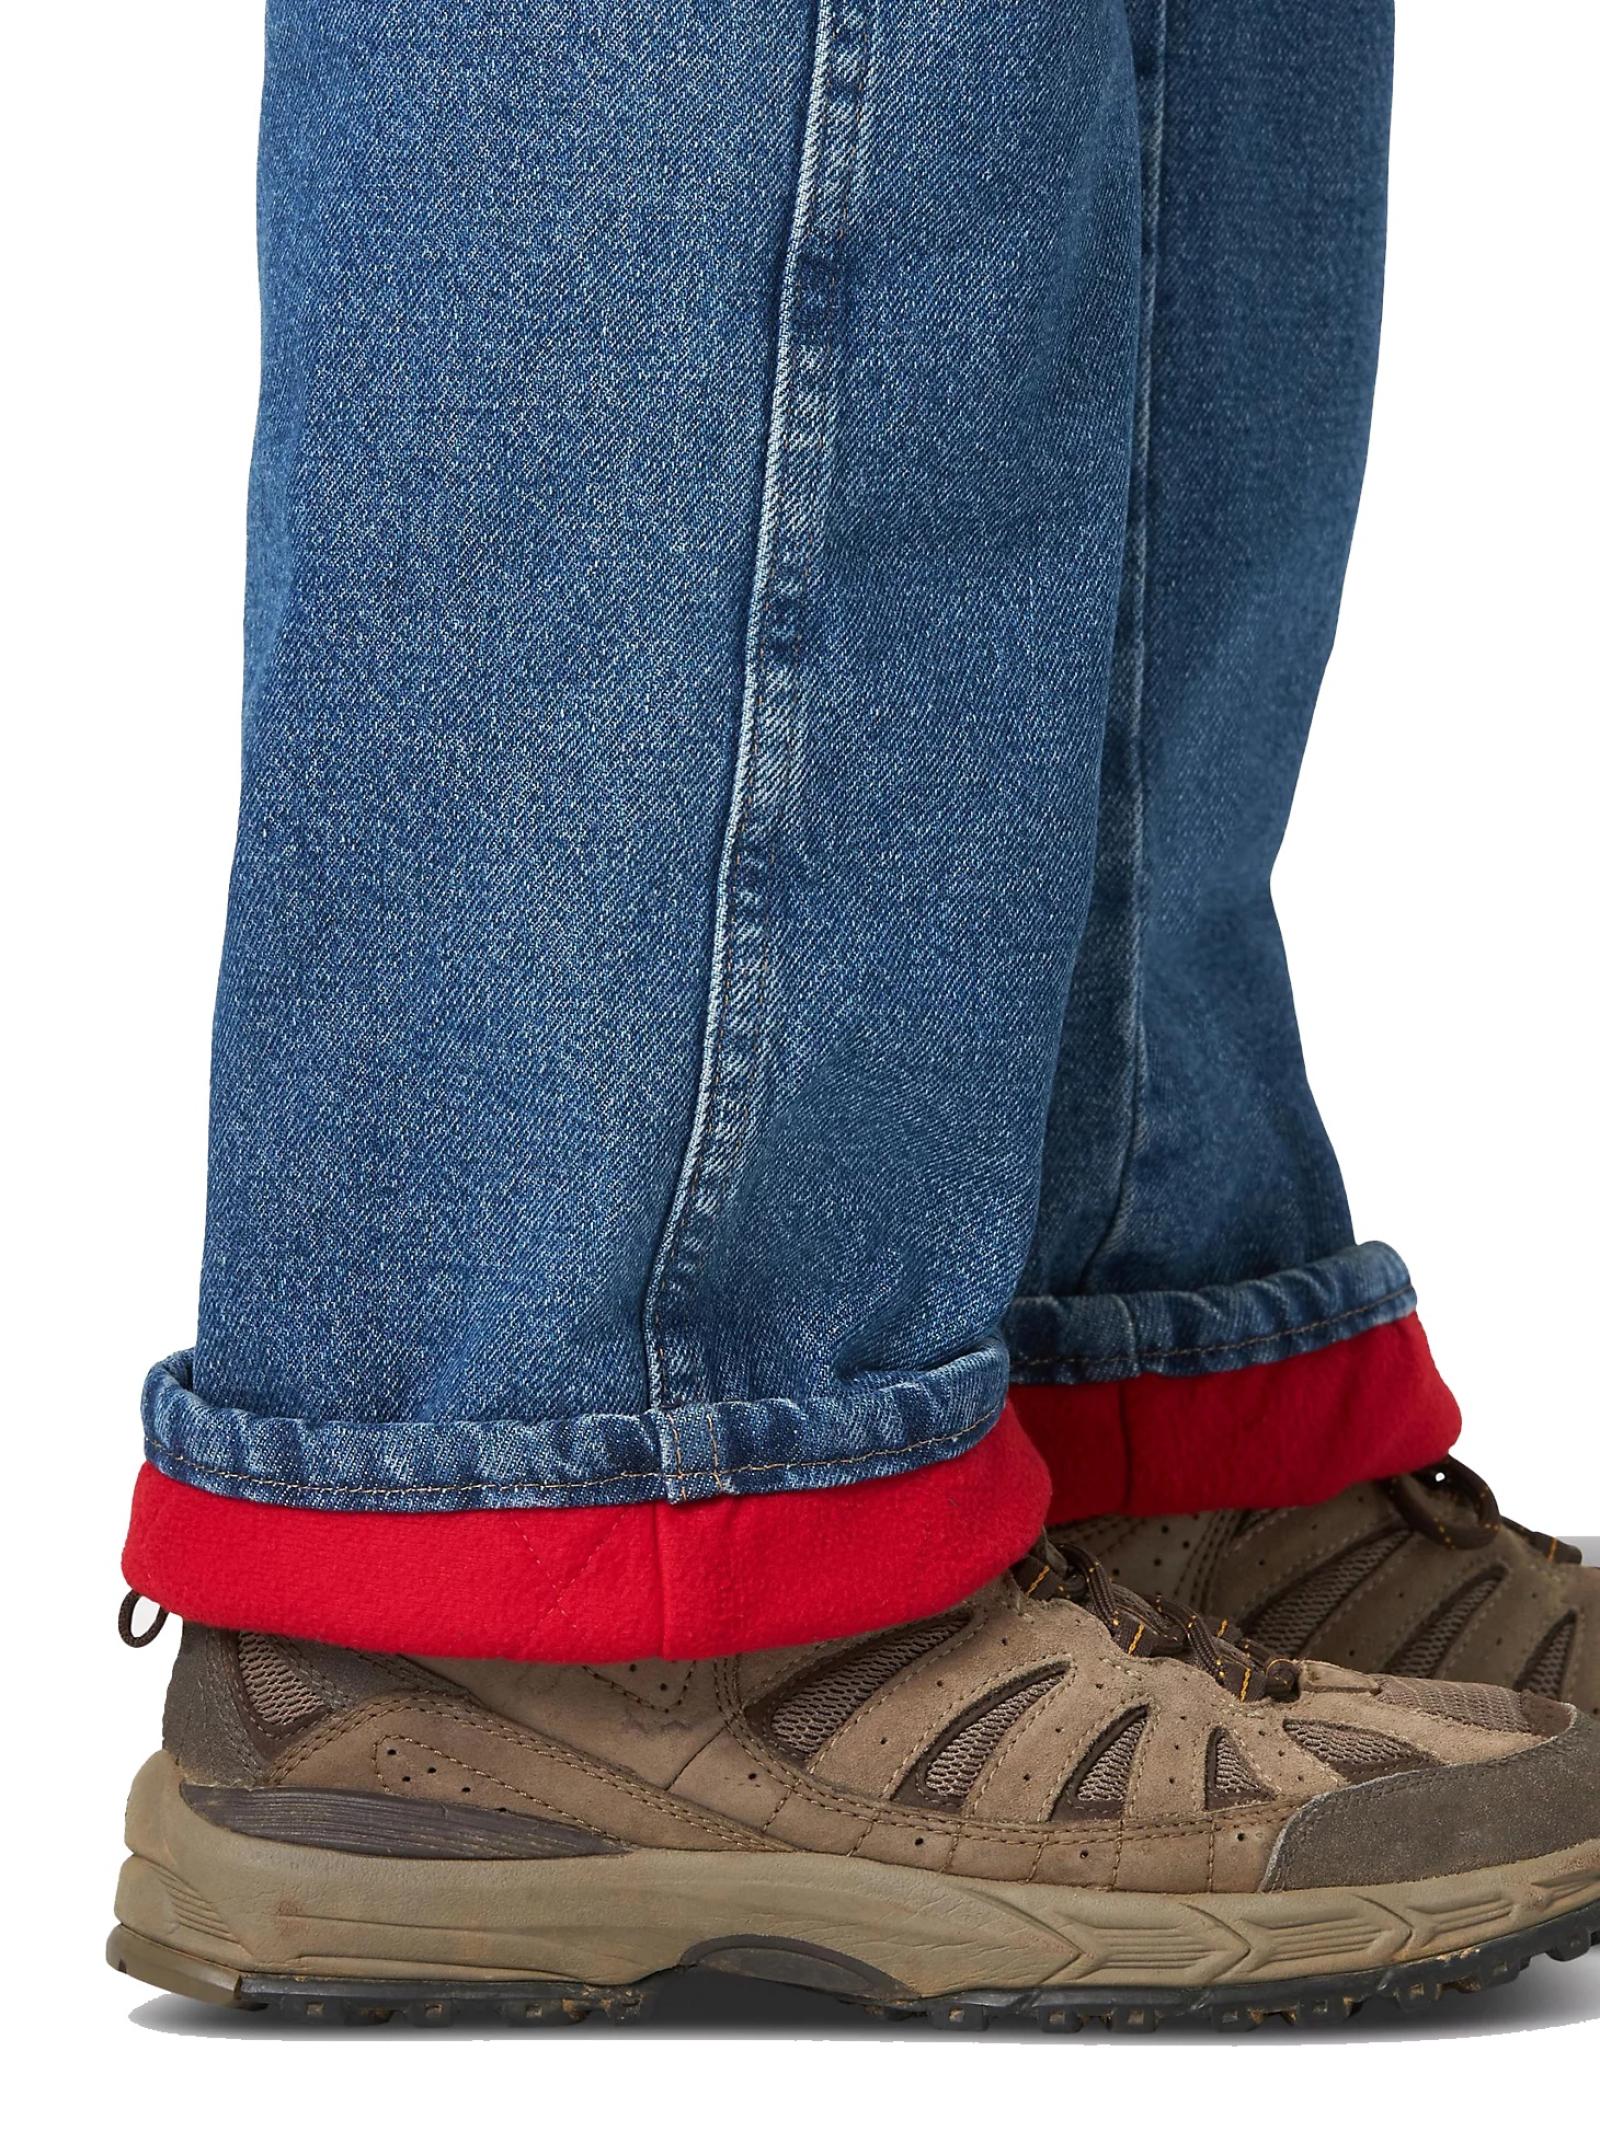 Wrangler Men's Rugged Wear Thermal Jean